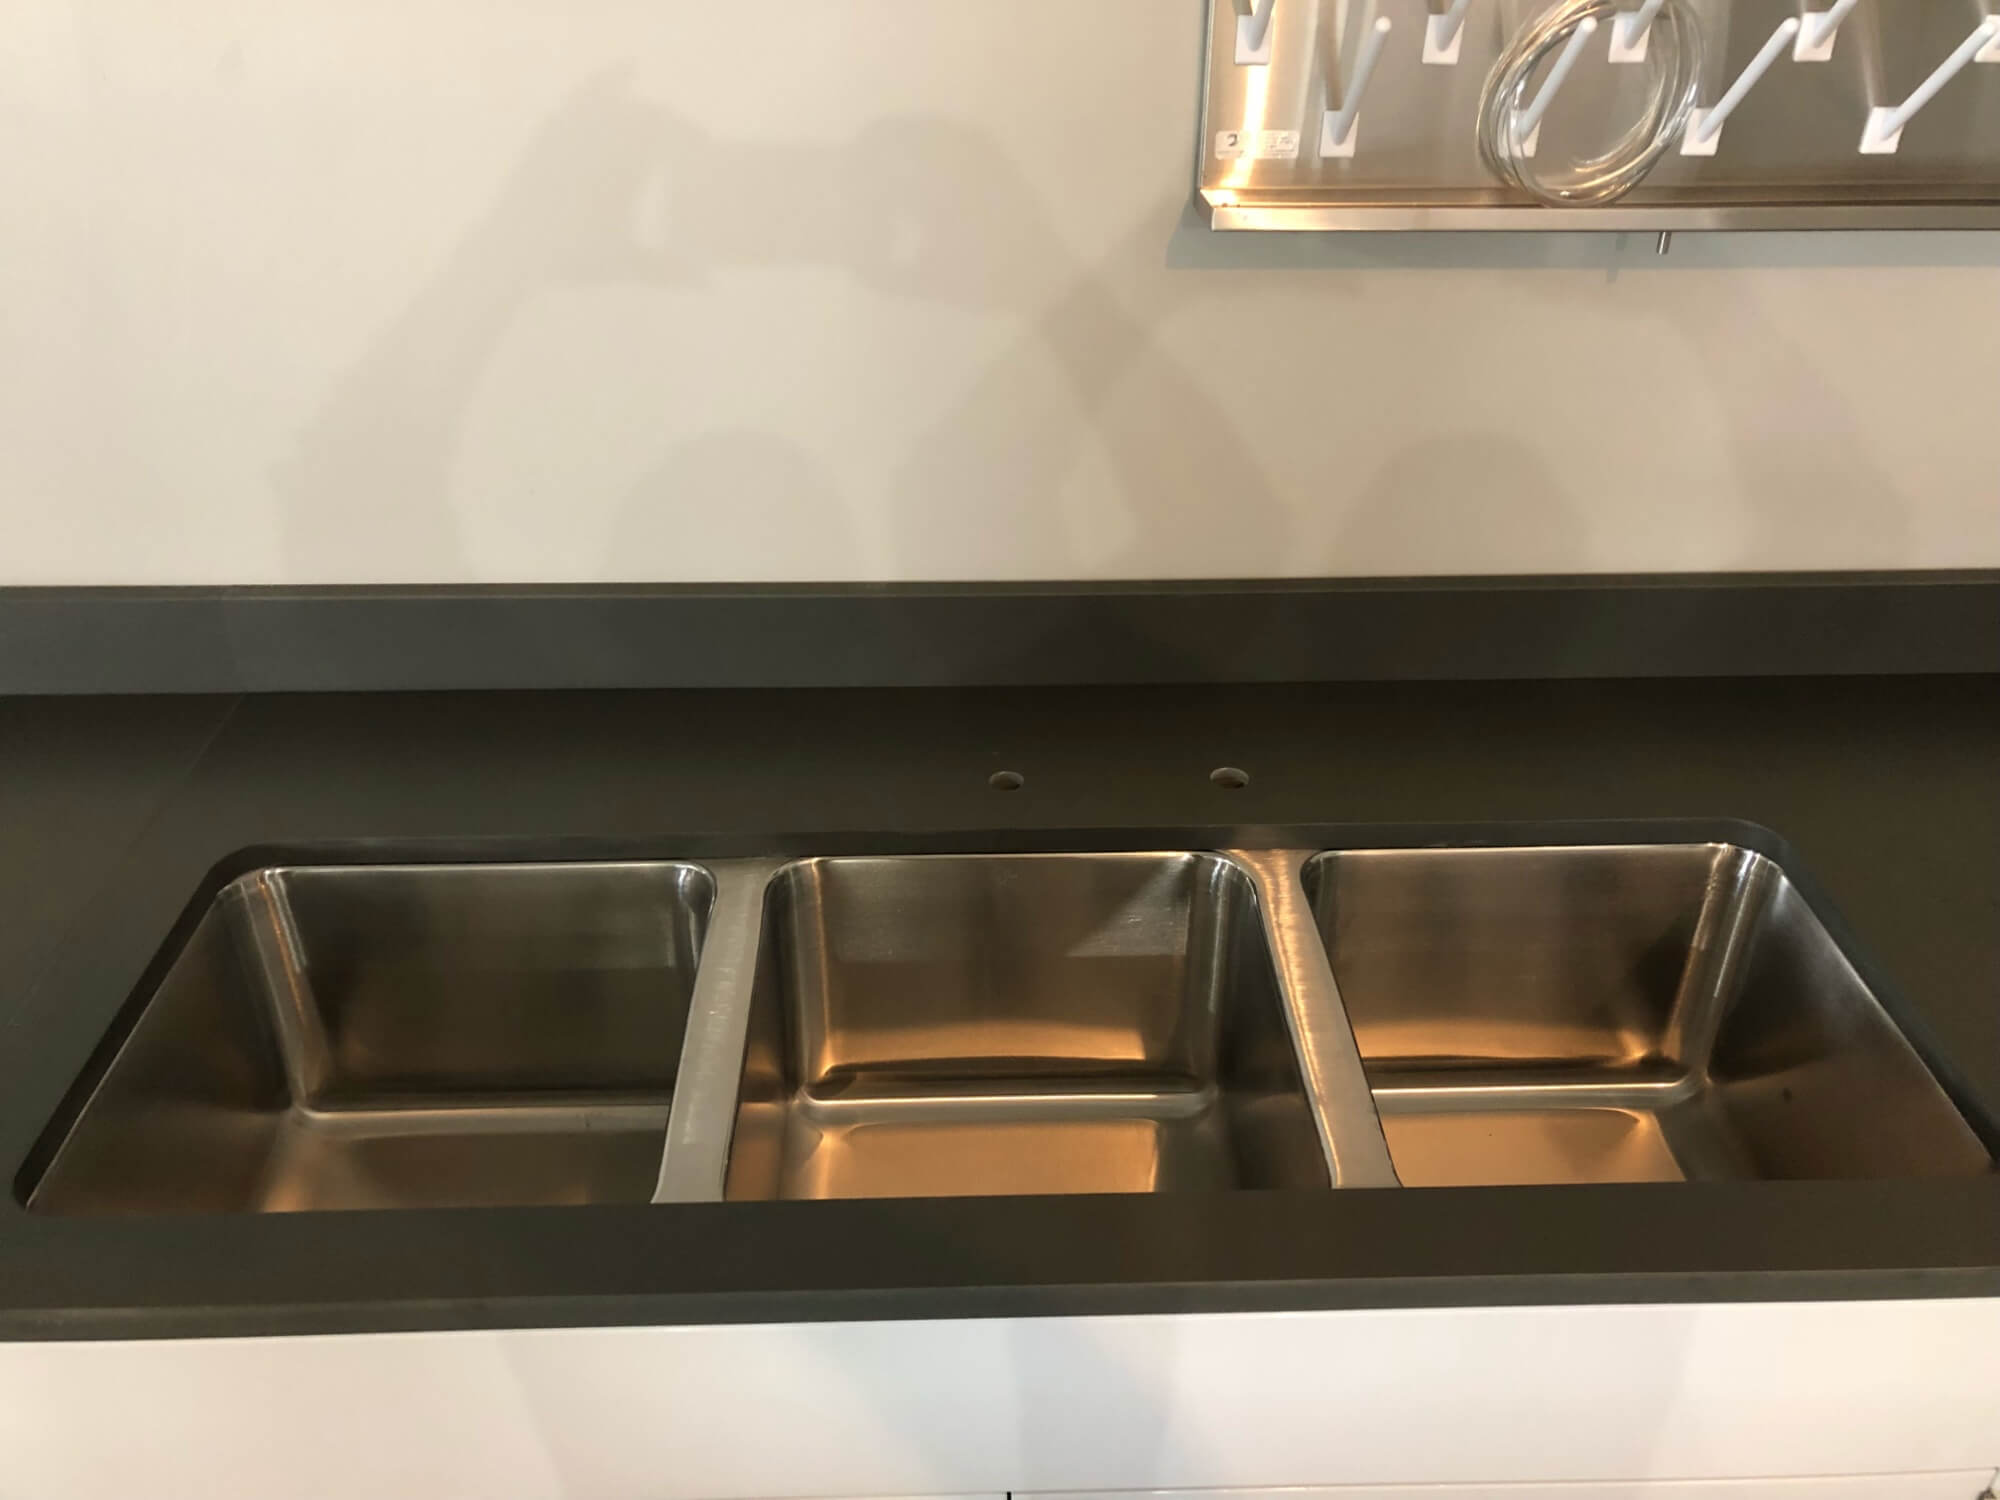 Undermount stainless steel sink installation